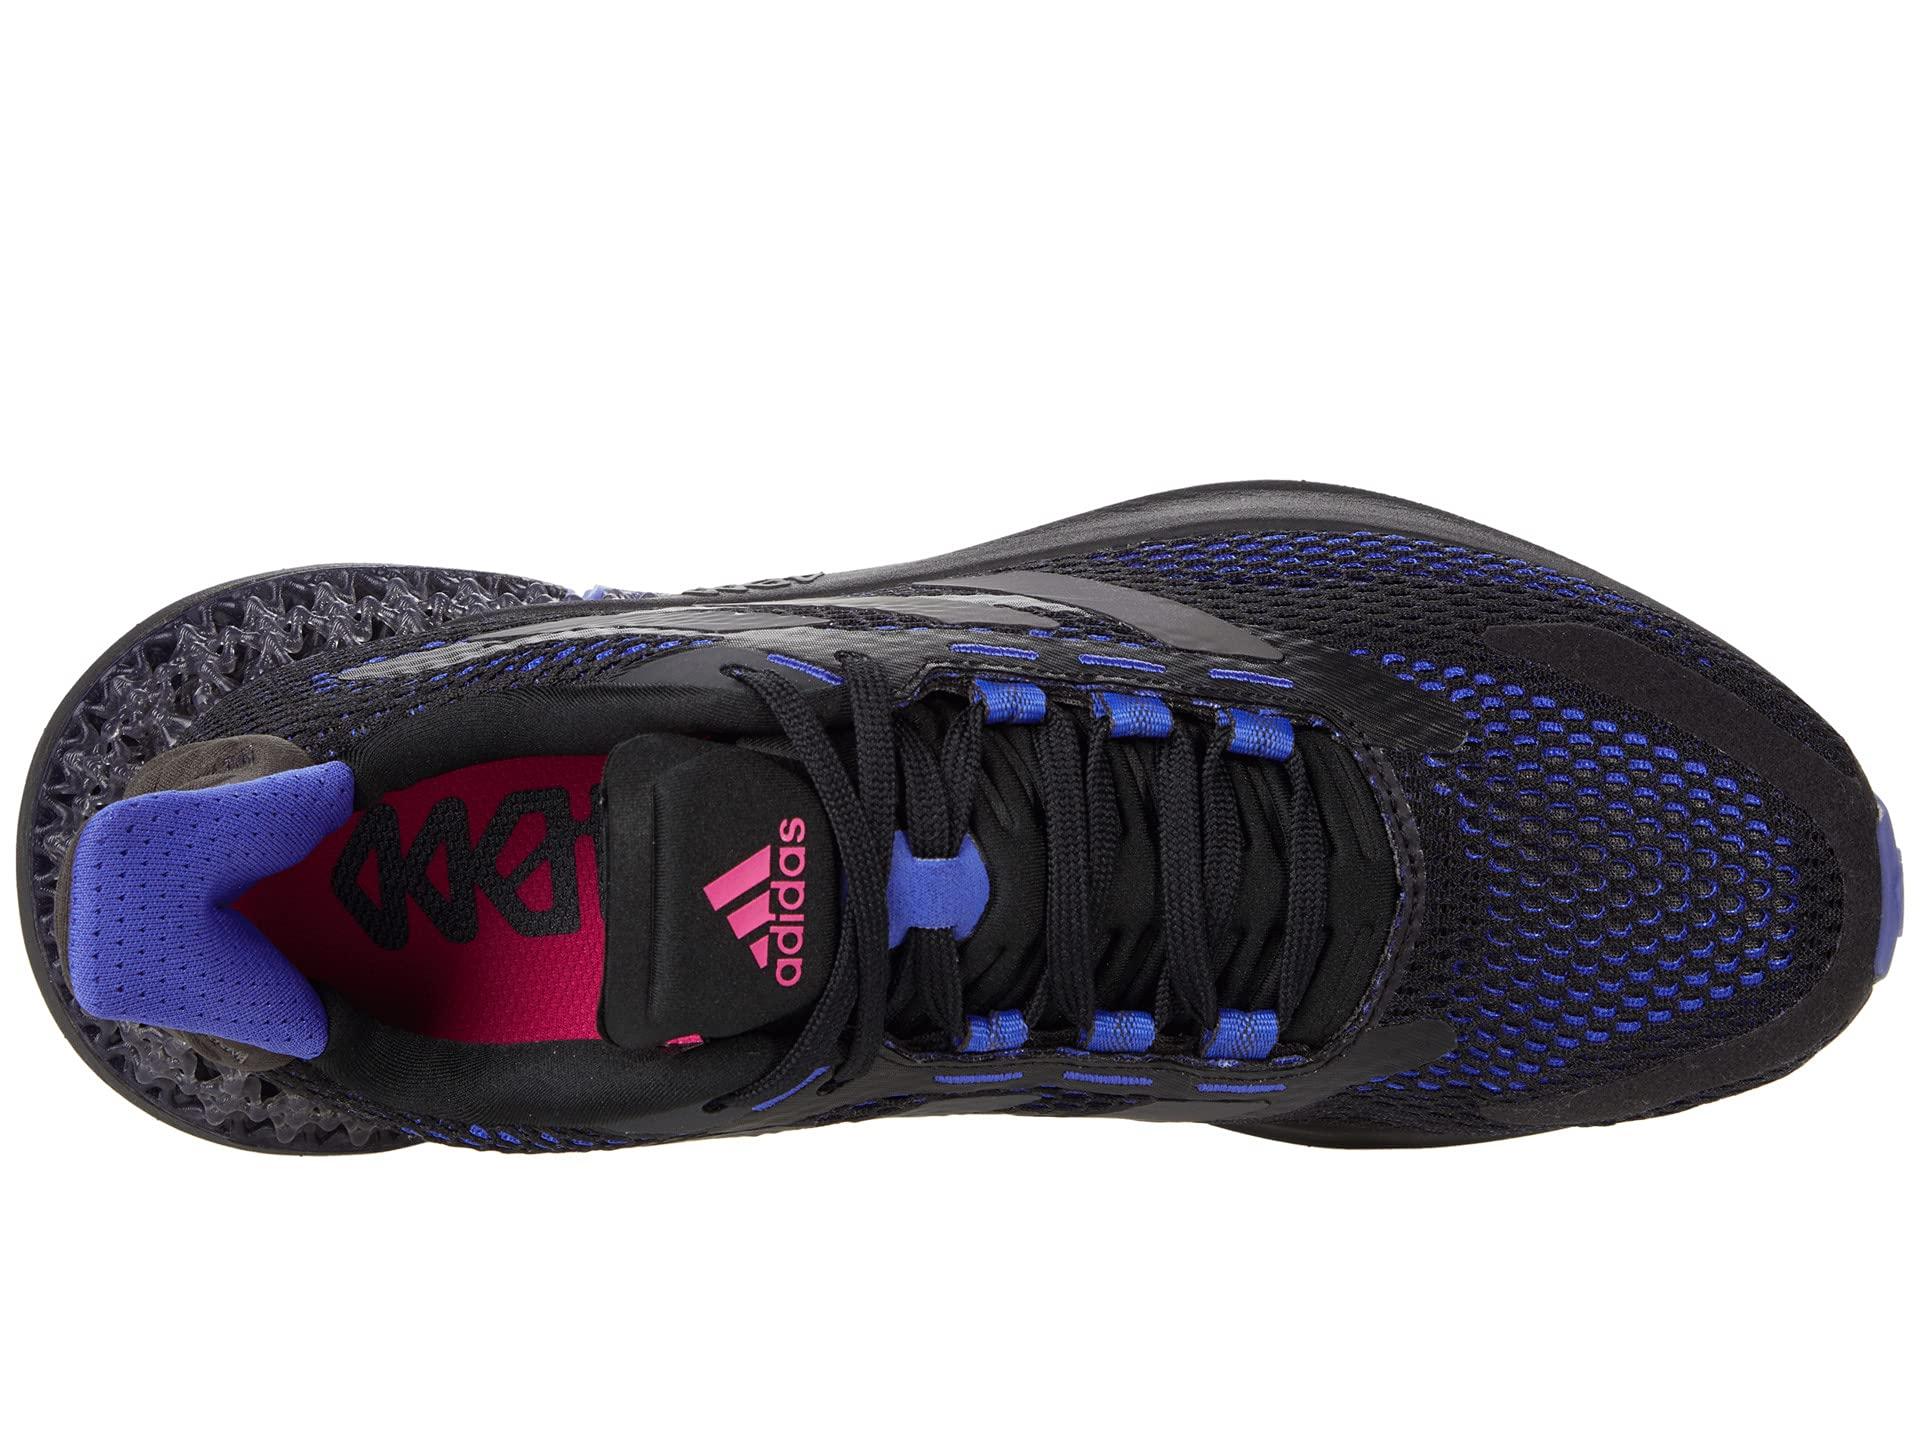 adidas Originals Lace 4dfwd Kick in Black (Blue) for Men - Lyst